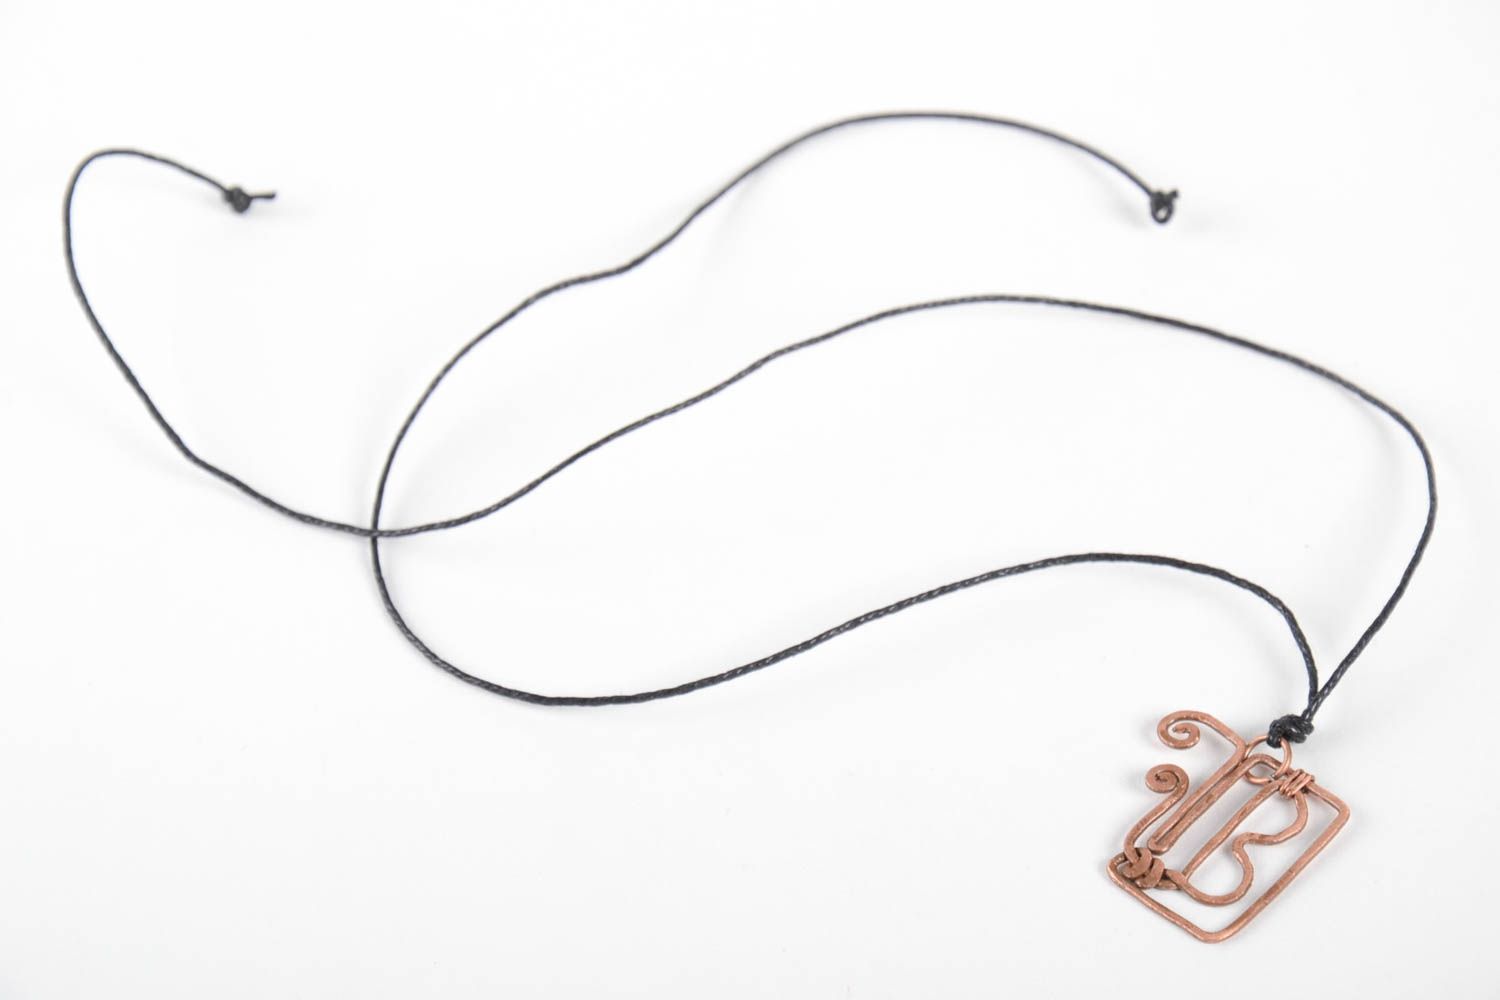 Designer copper pendant handmade pendant wire wrap jewelry stylish accessories photo 4